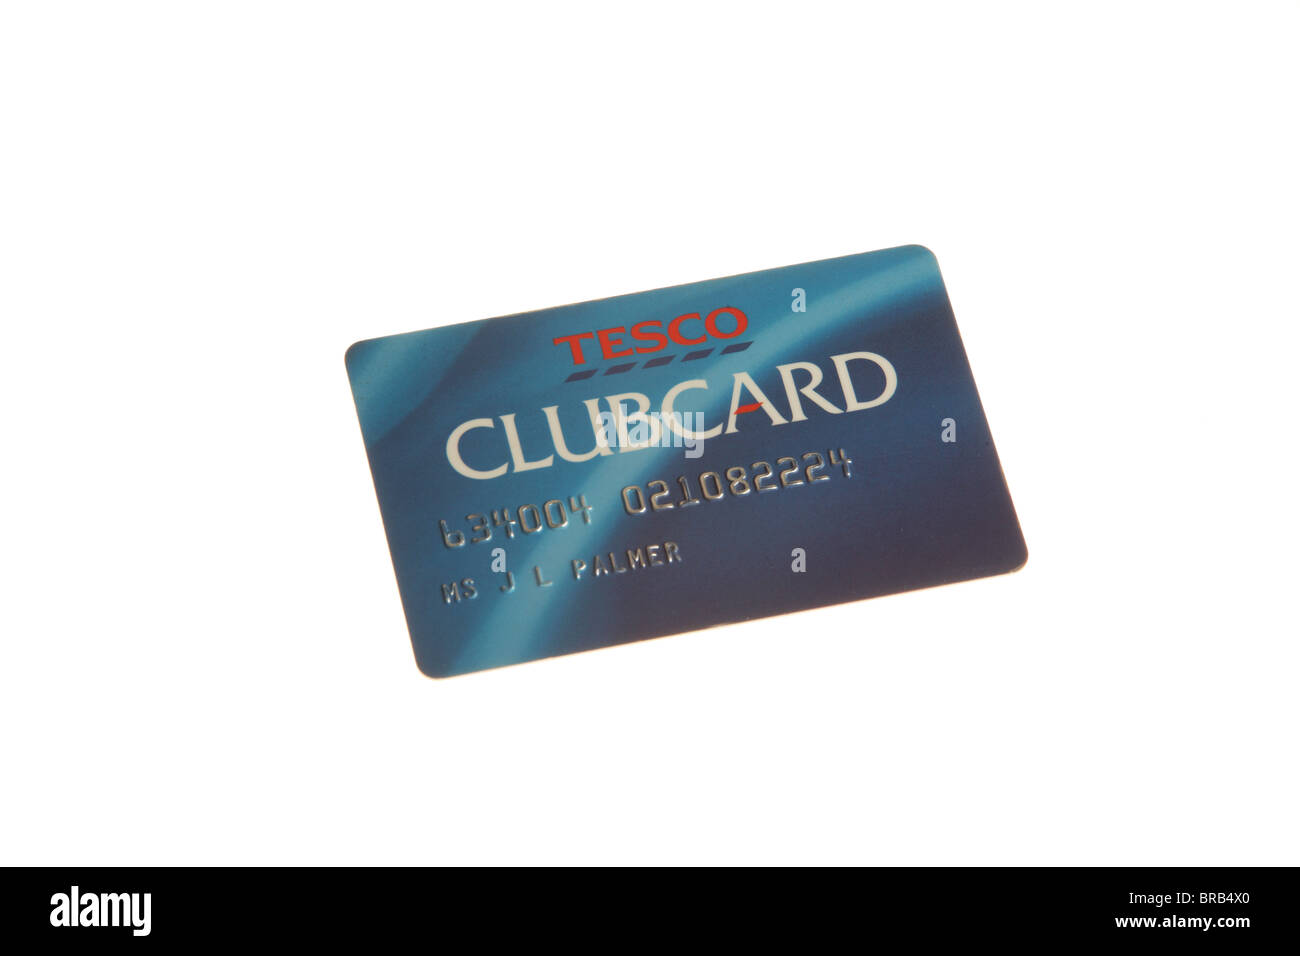 Tesco Clubcard Stock Photo